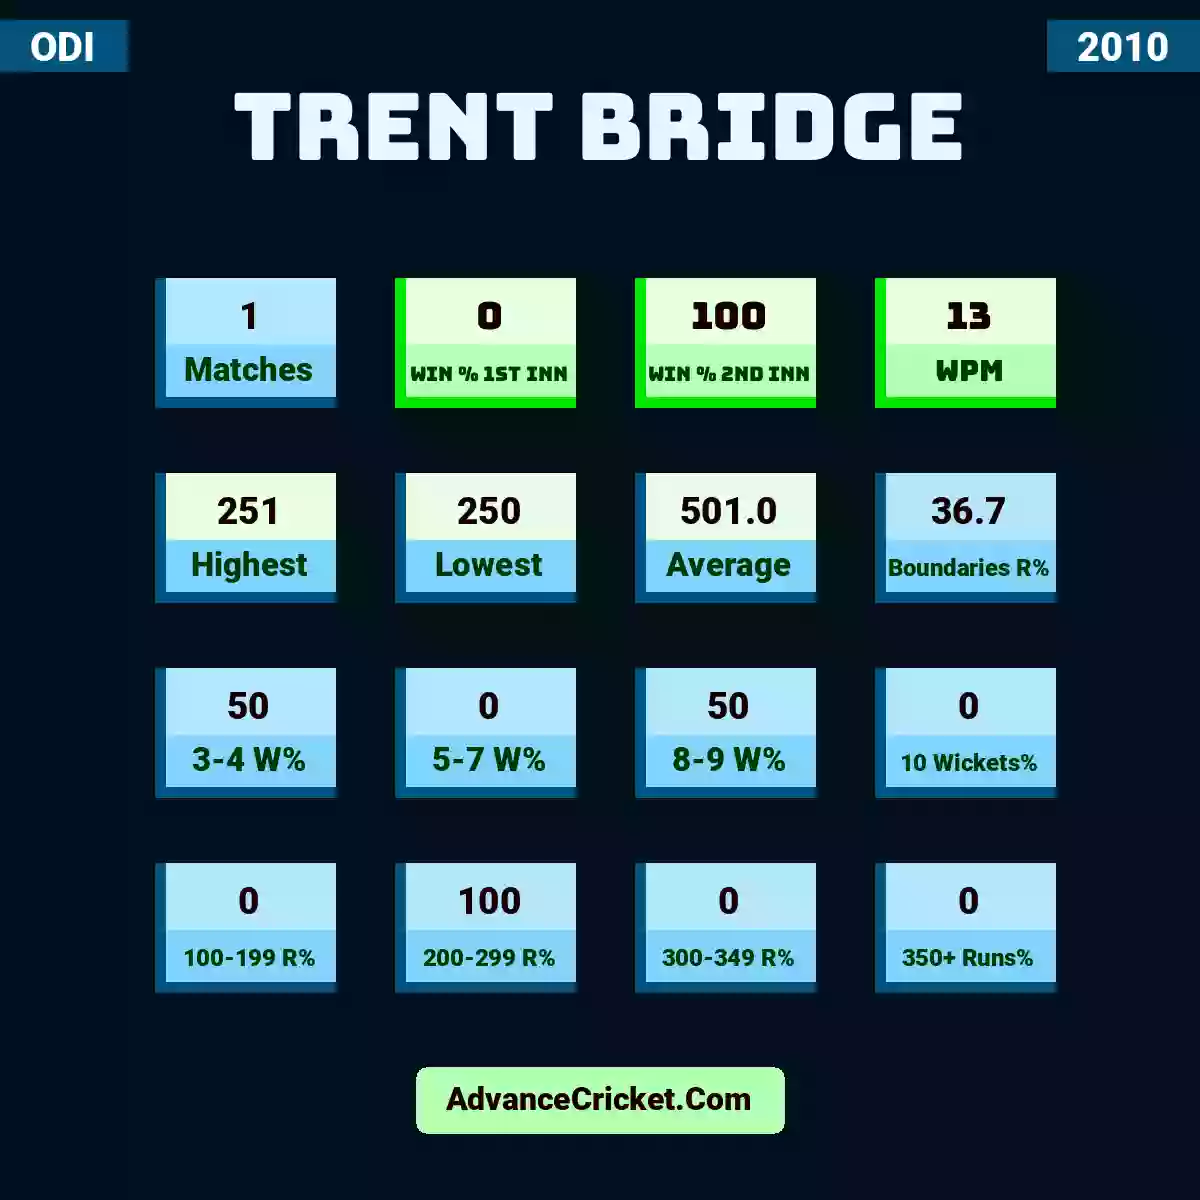 Image showing Trent Bridge with Matches: 1, Win % 1st Inn: 0, Win % 2nd Inn: 100, WPM: 13, Highest: 251, Lowest: 250, Average: 501.0, Boundaries R%: 36.7, 3-4 W%: 50, 5-7 W%: 0, 8-9 W%: 50, 10 Wickets%: 0, 100-199 R%: 0, 200-299 R%: 100, 300-349 R%: 0, 350+ Runs%: 0.